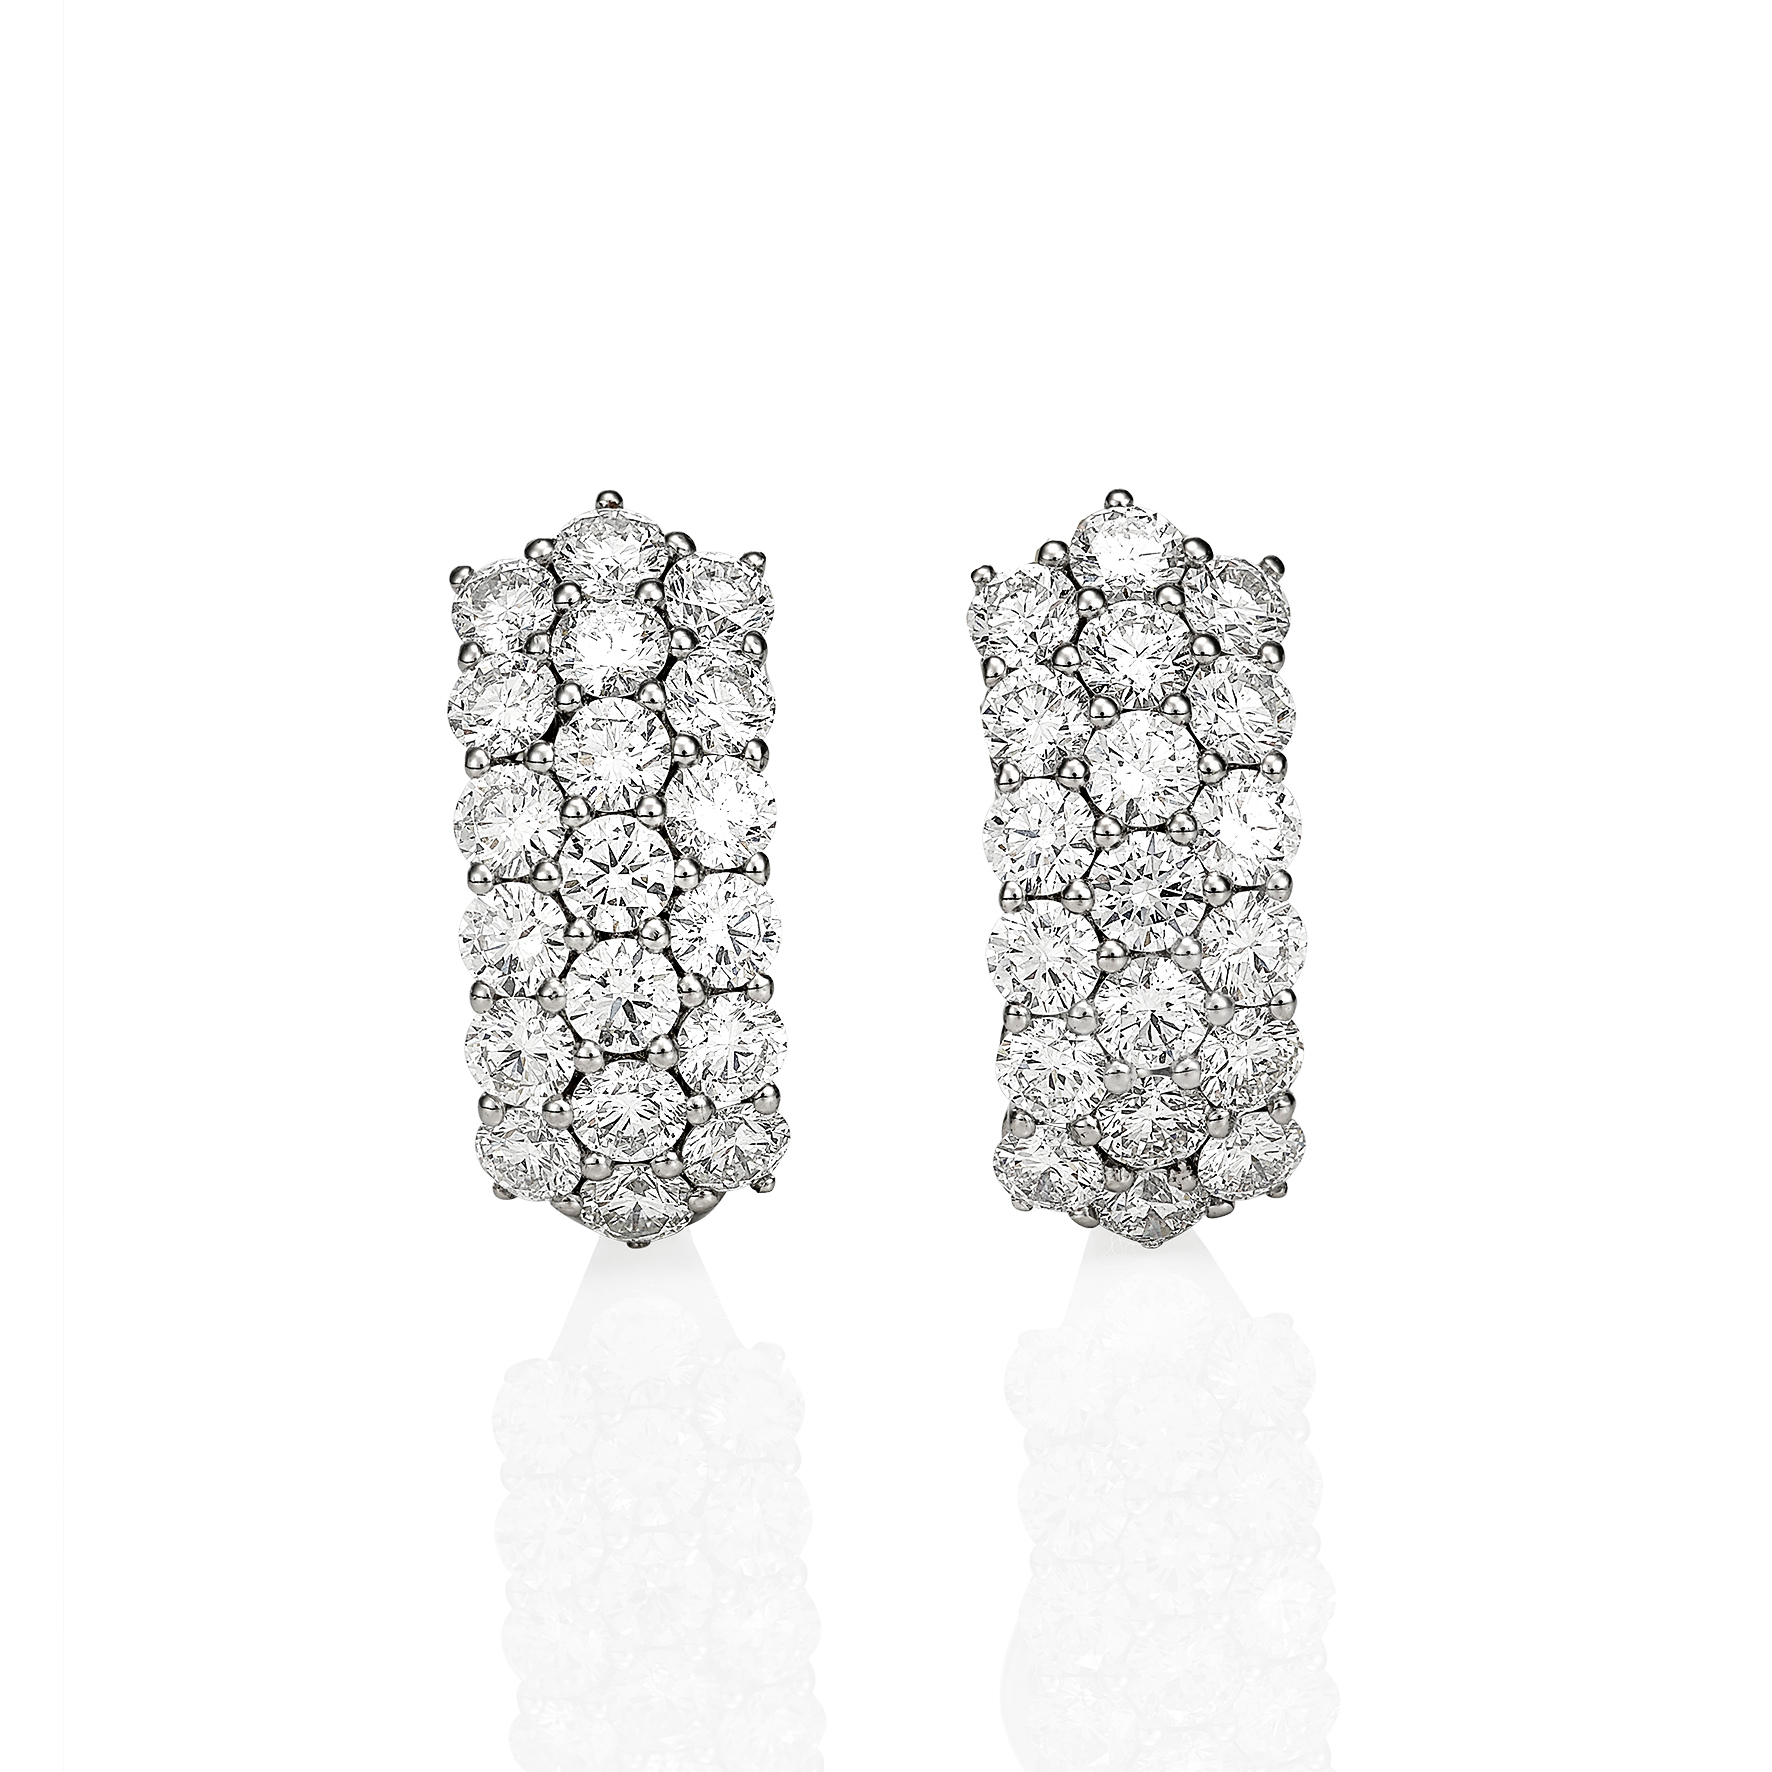 Diamond Earrings for sale in Sydney, Australia | Facebook Marketplace |  Facebook